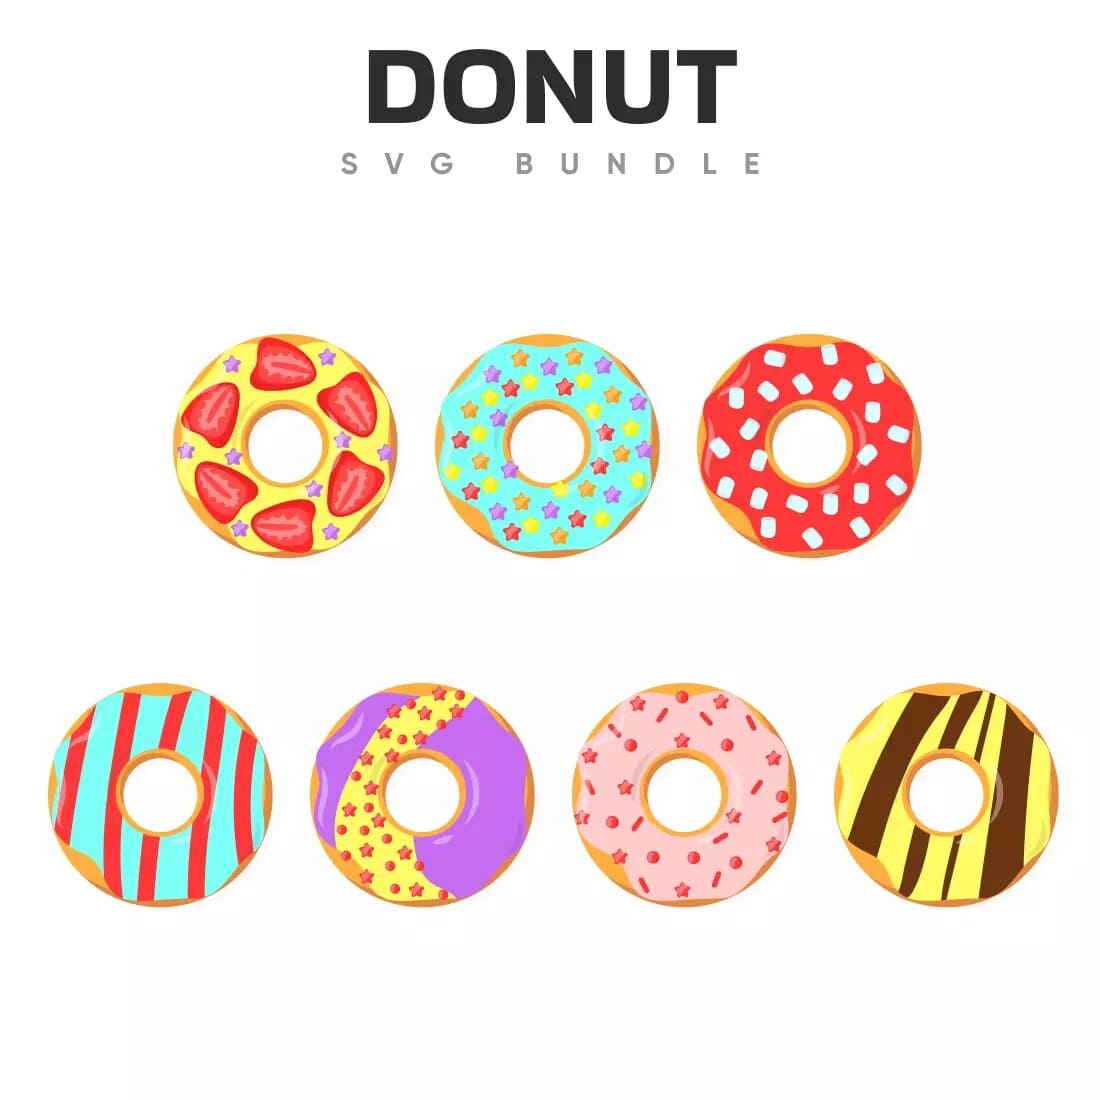 Donut SVG Bundle Preview 1.